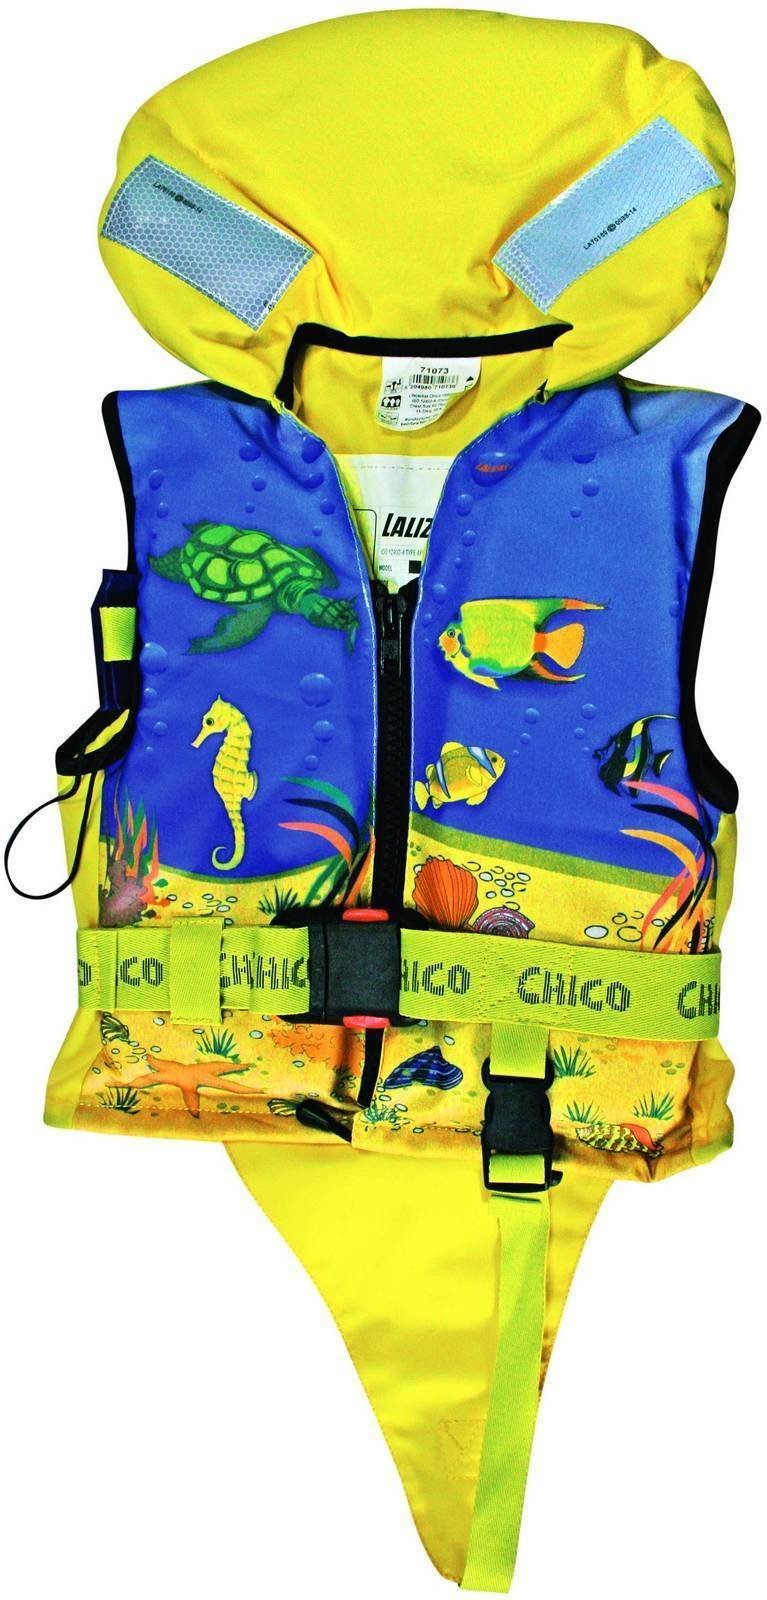 Life Jacket Lalizas Chico Lifejacket 10-20kg